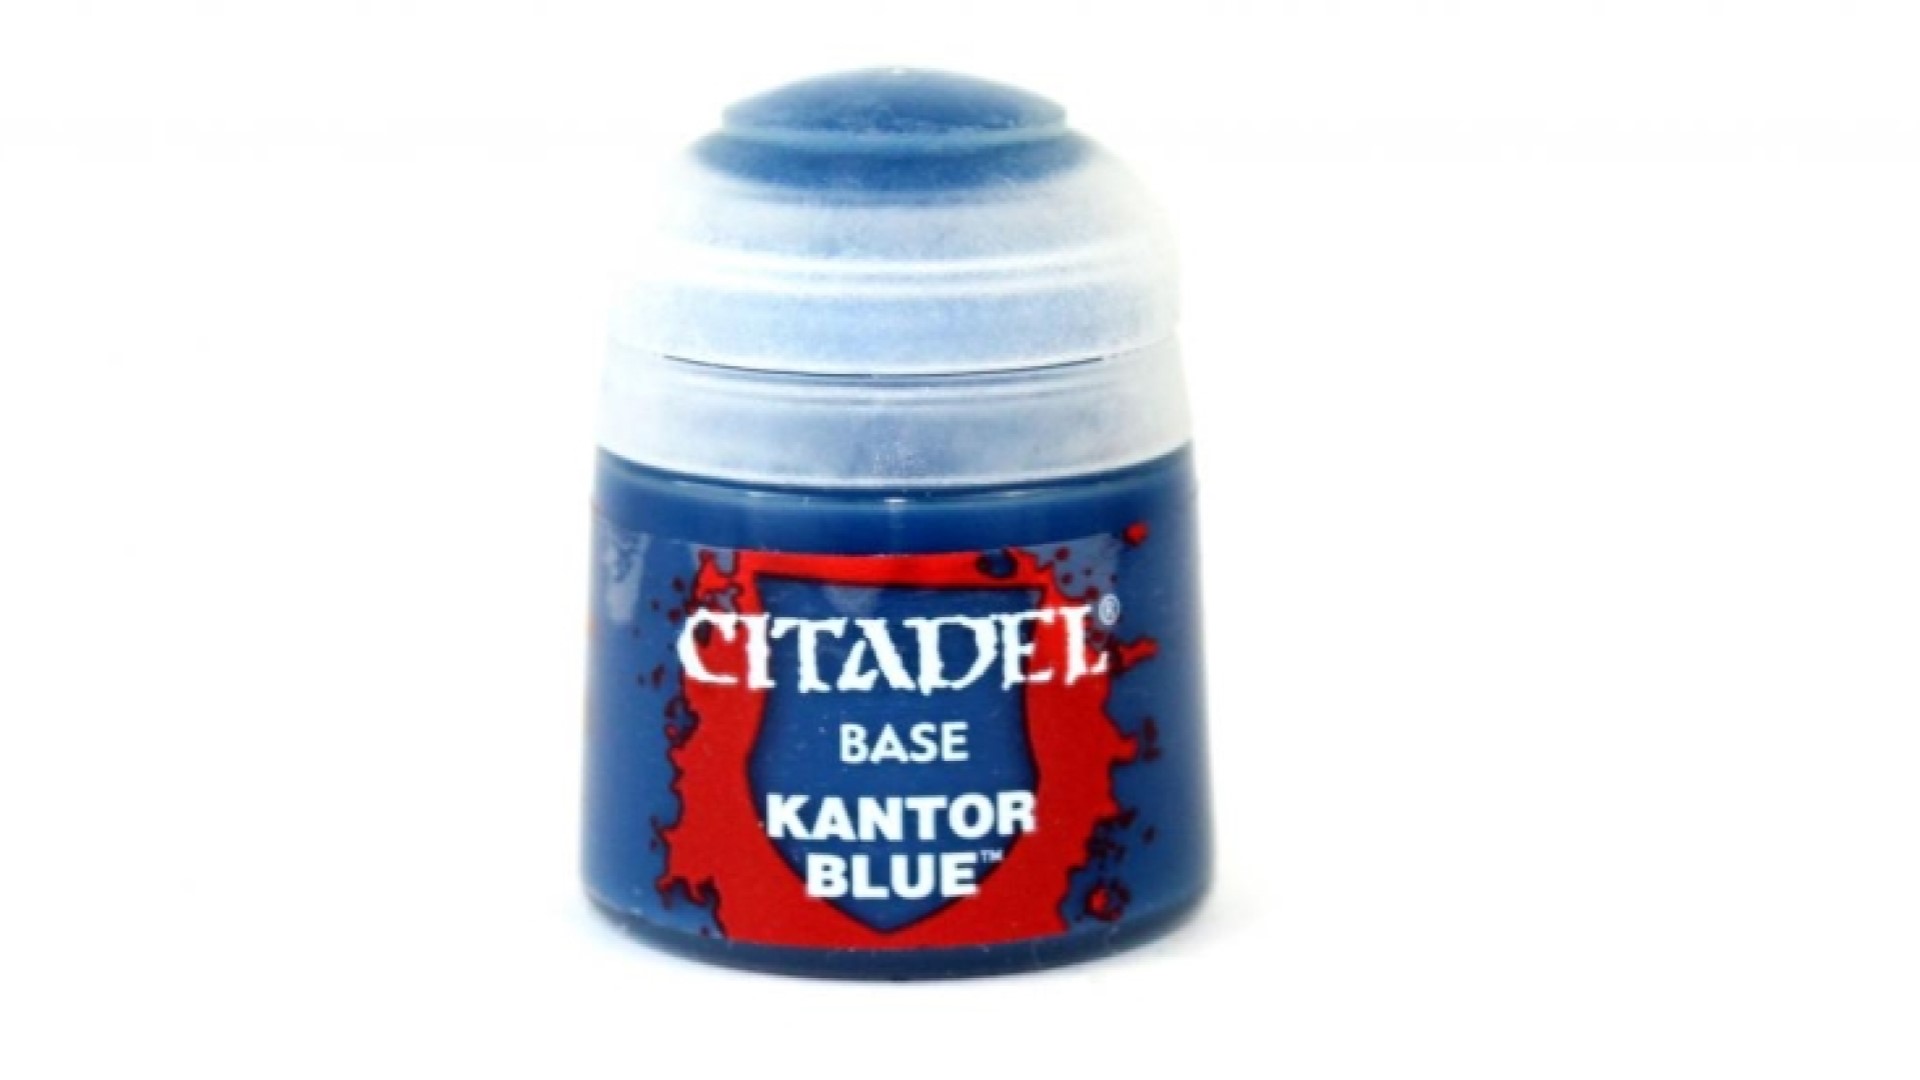 Best paints for miniatures - Photo of a pot of Citadel Kantor Blue base paint